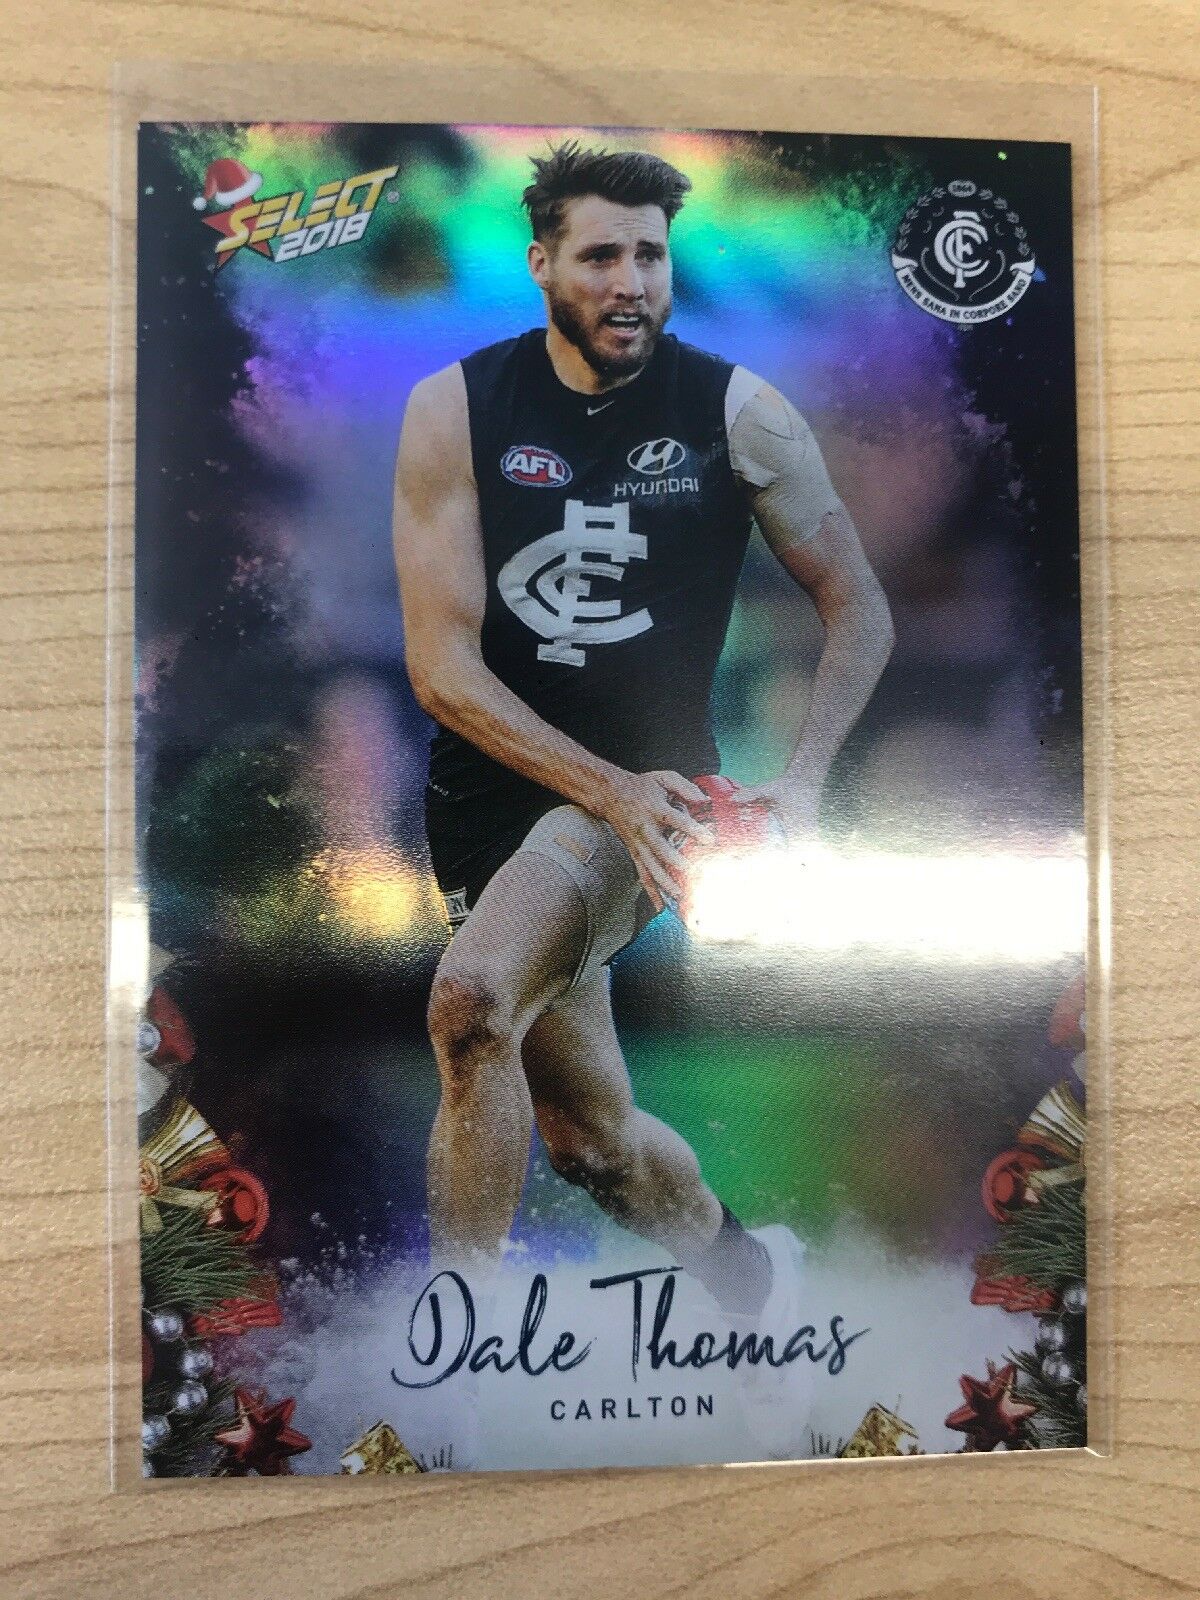 AFL 2018 Select Christmas Holofoil Card X36 - Carlton Blues, Dale Thomas